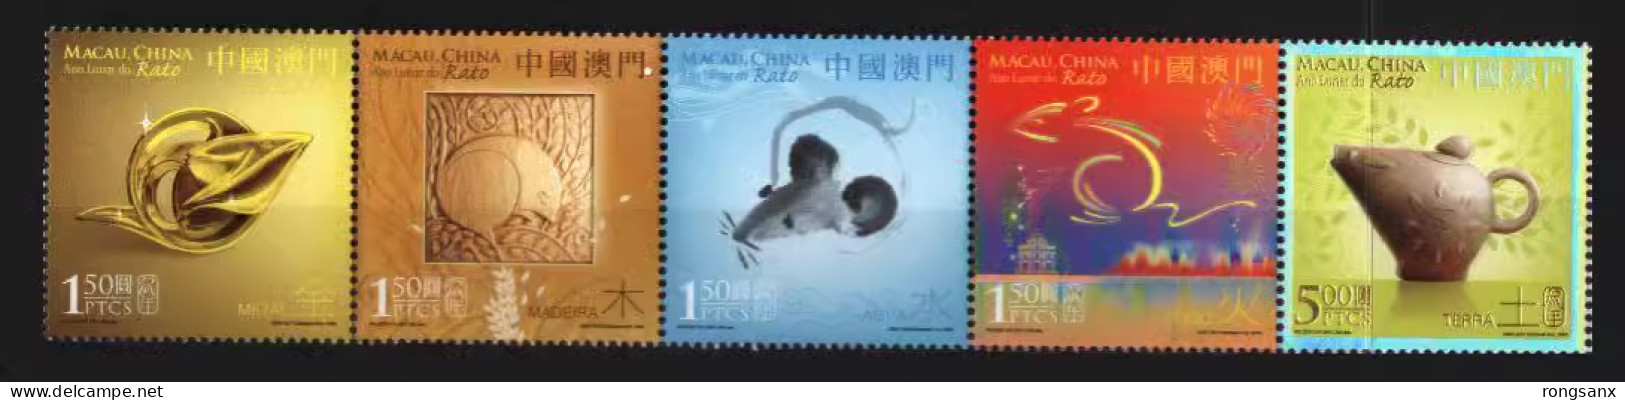 2008 MACAO/MACAU YEAR OF THE RAT STAMP 5V - Unused Stamps